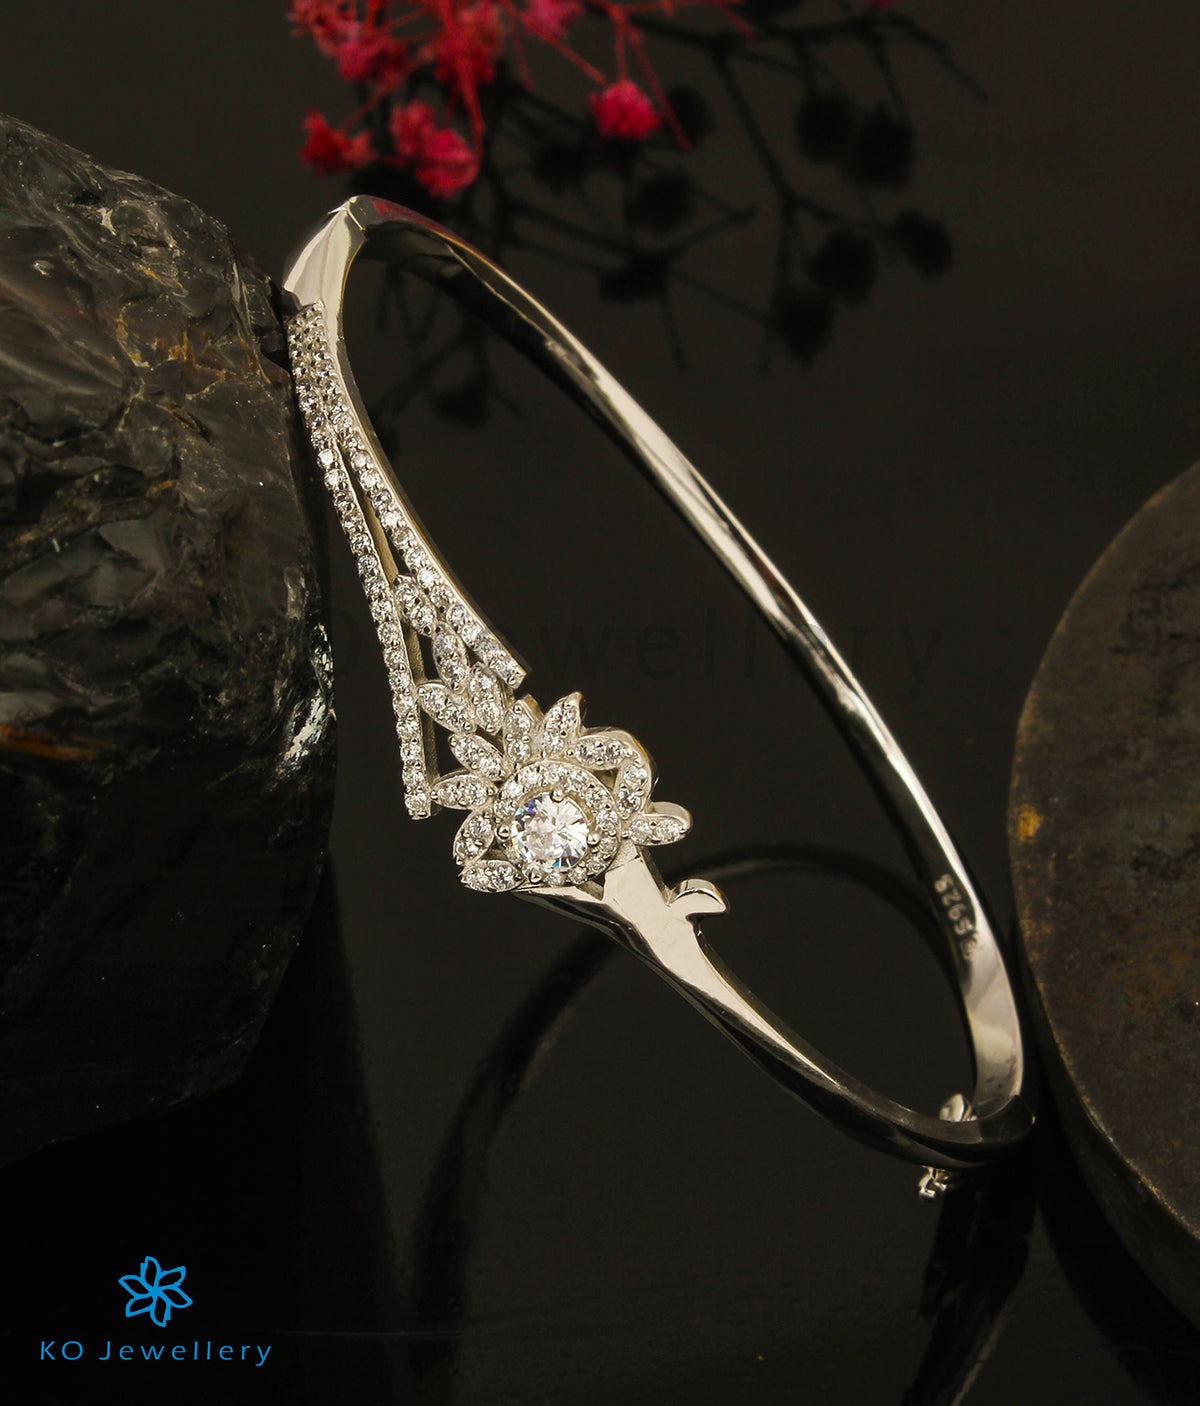 Buy Auspicious Aum Charm Silver Bracelet for Girls- Aumkaaara Bracelet